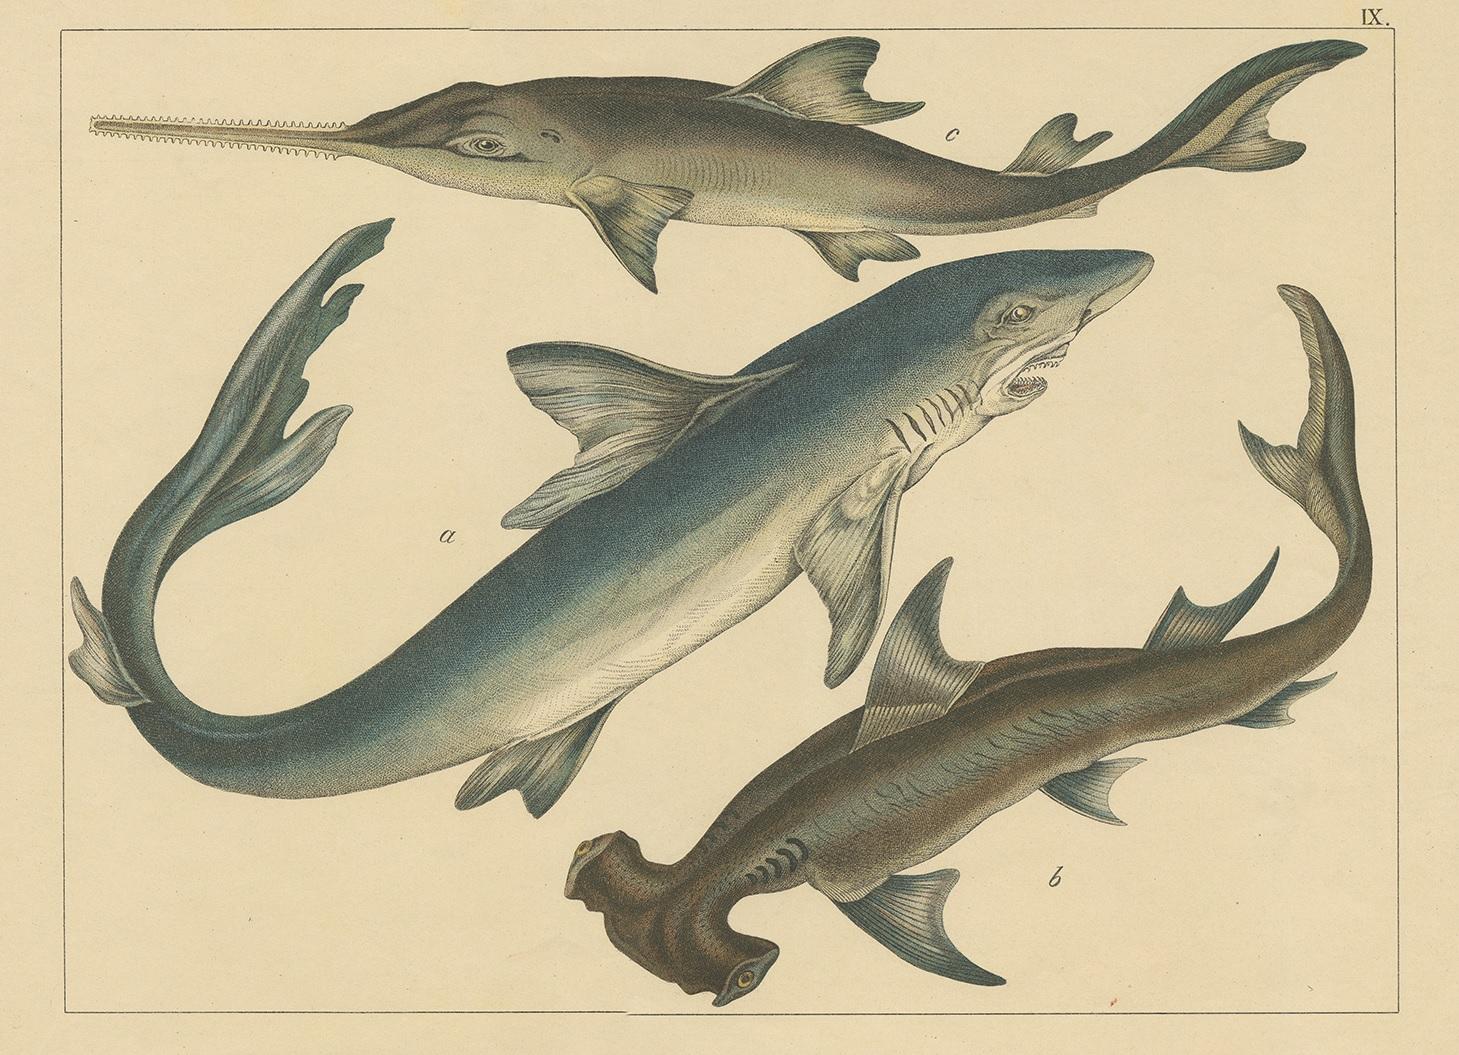 Chromolithograph of great white shark, hammerhead shark and sawfish. This print originates from Schubert's 'Naturgeschichte des Thierreichs' published circa 1875.